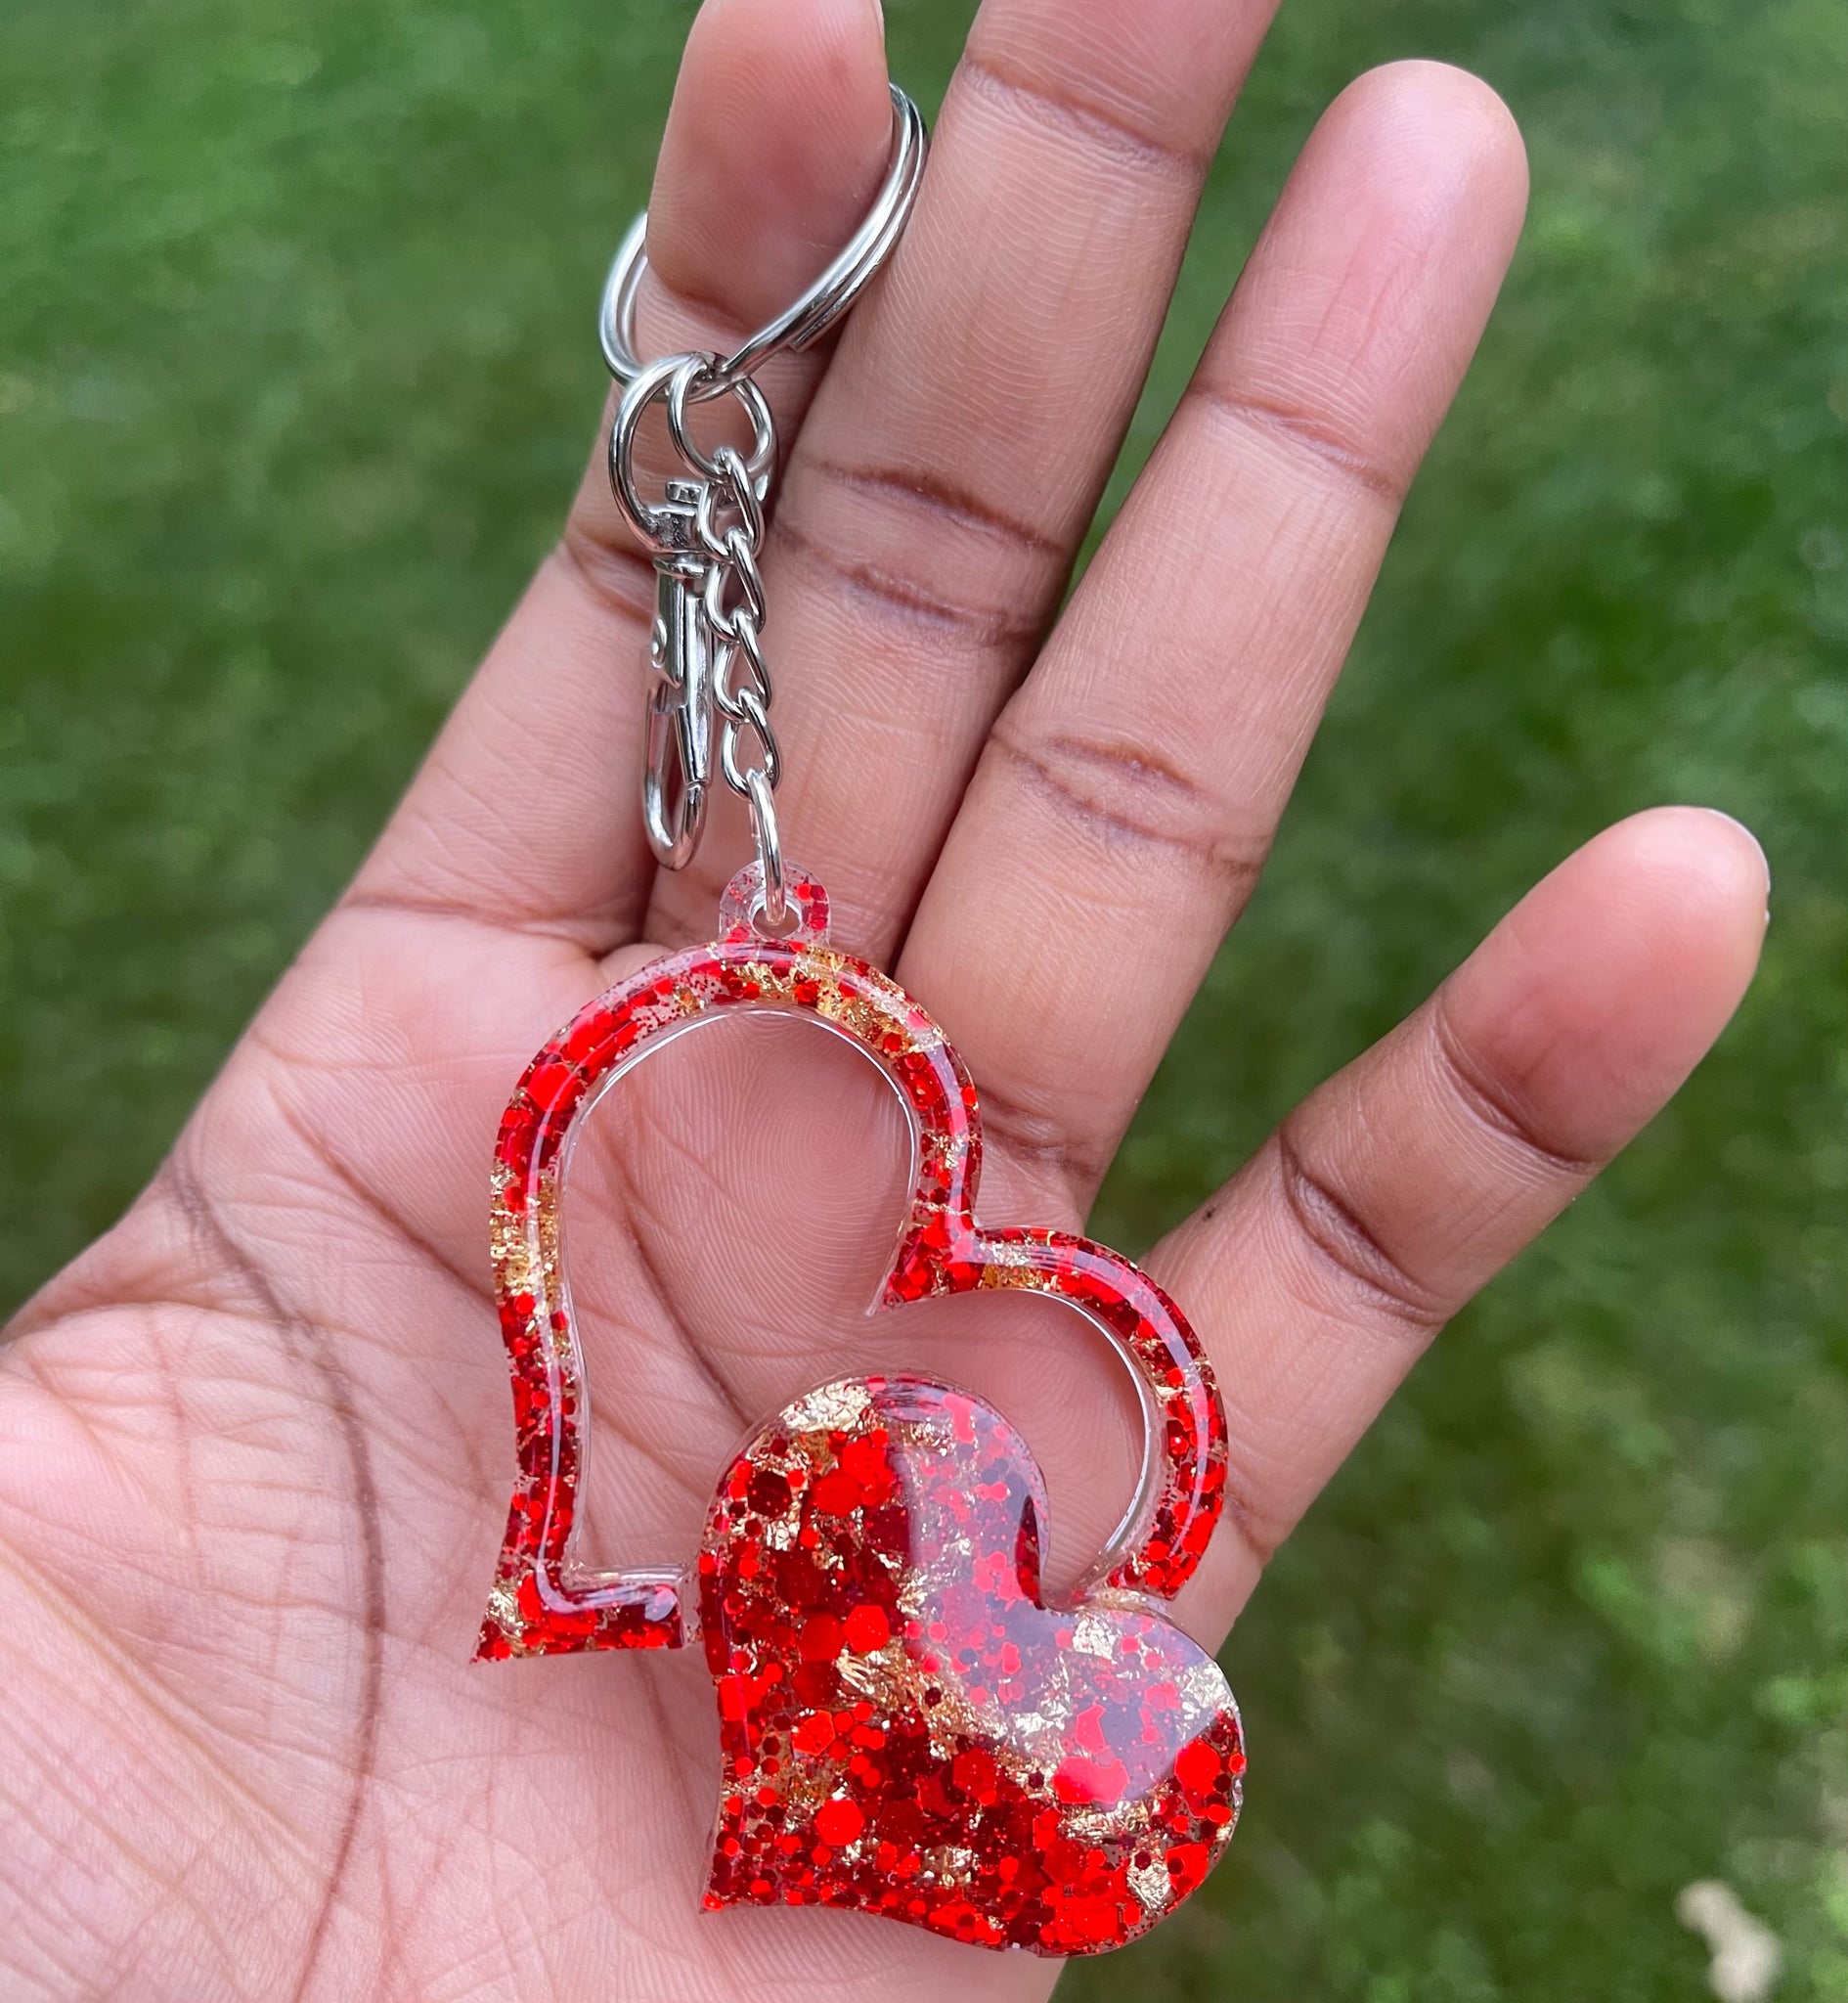 Heart resin keychains/Llaveros en resina (corazones) 